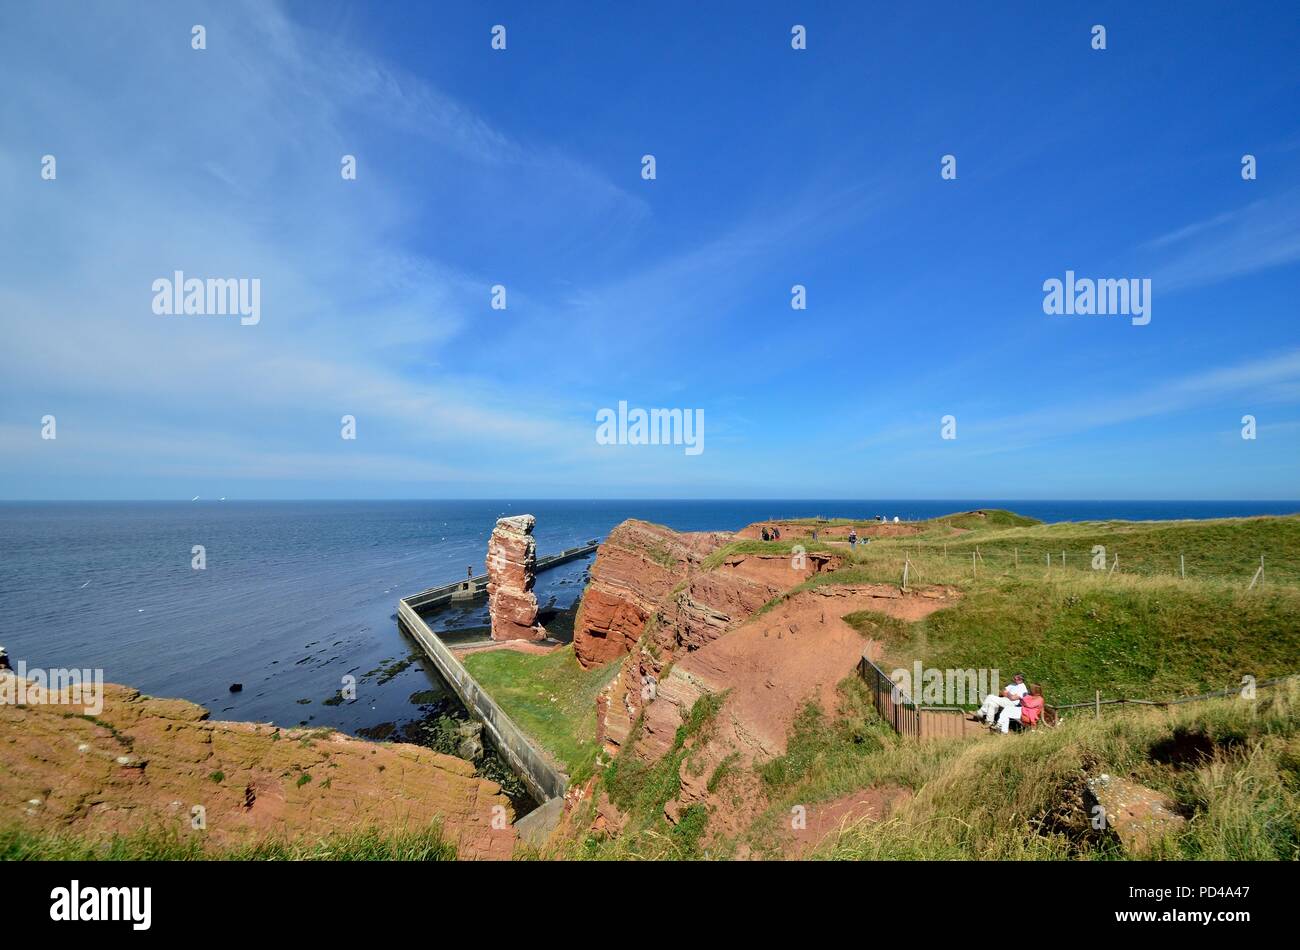 Lange Anna, Tall Anna, Helgoland, mar del norte, Nordsee, alemania, Alemania Foto de stock